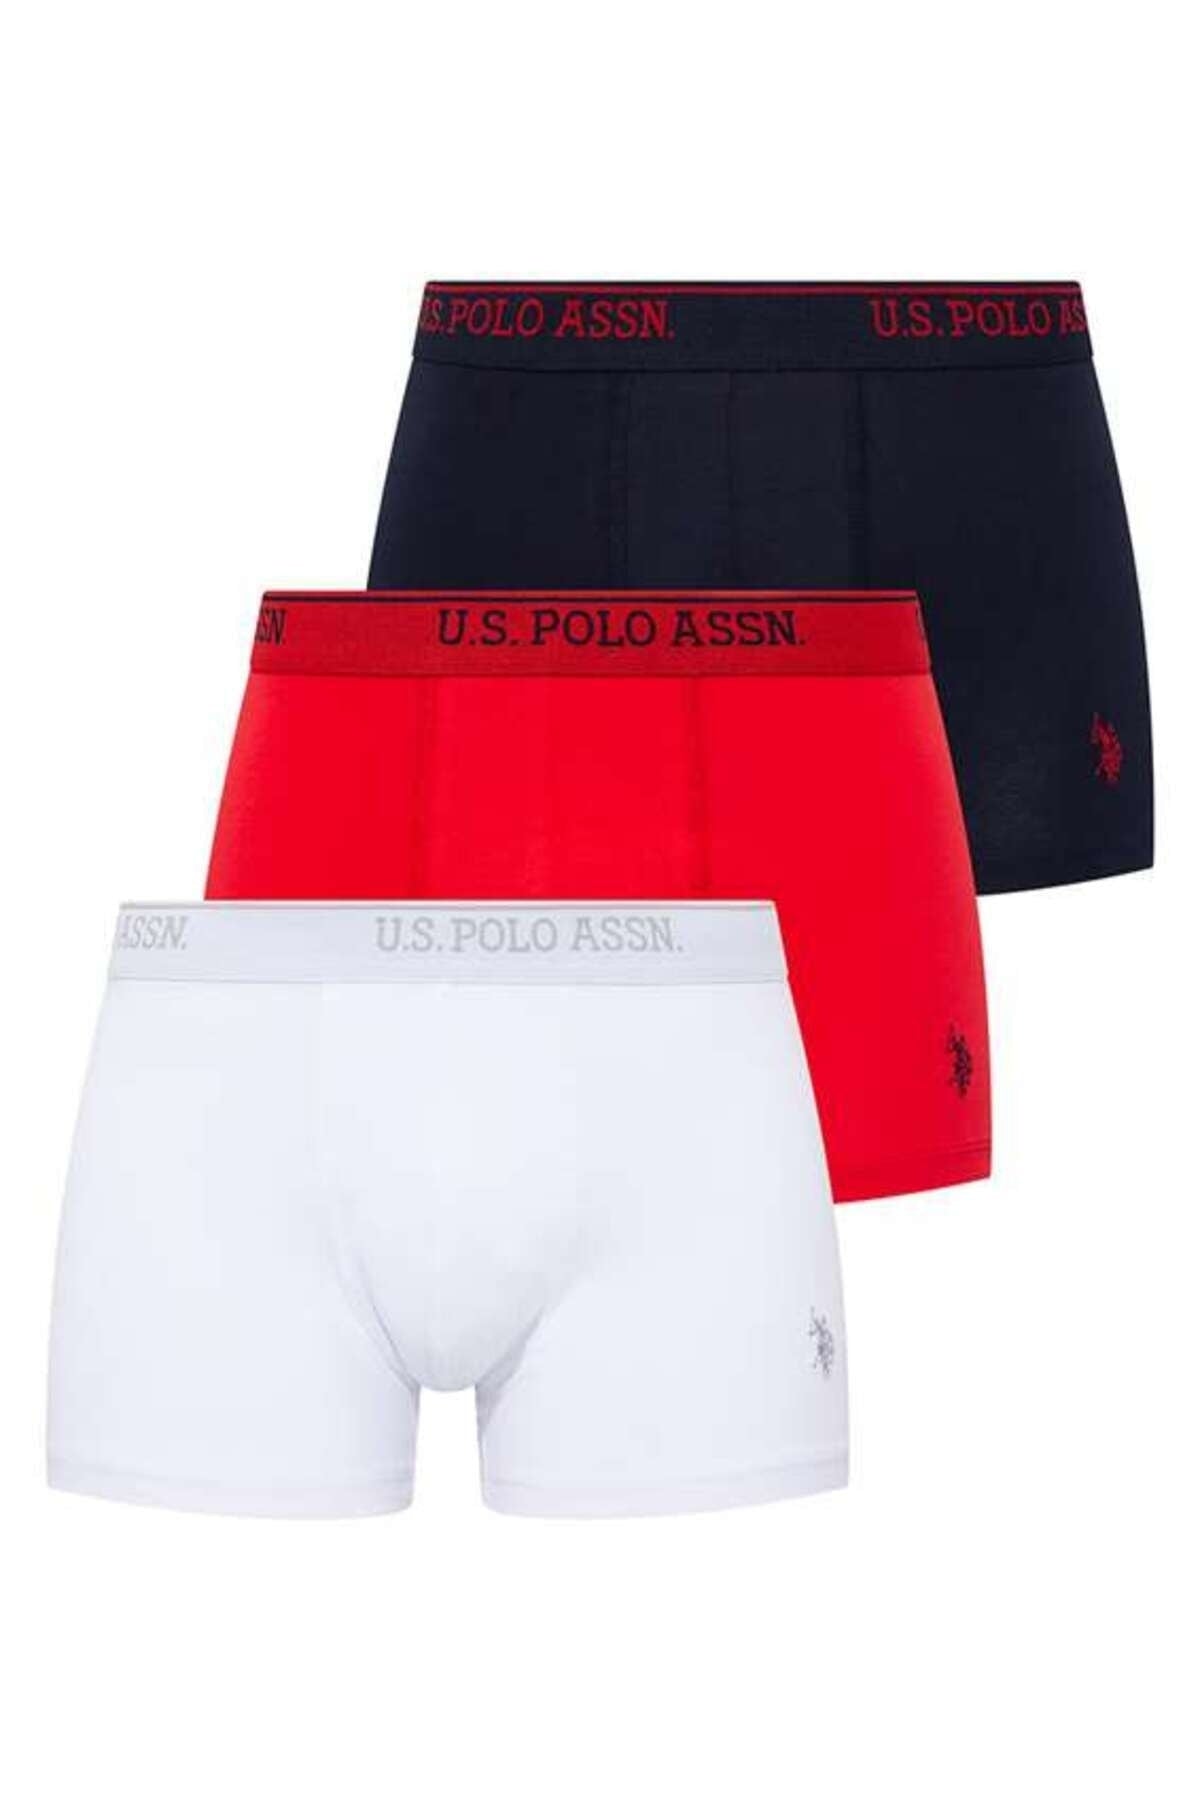 Us Polo Assn 80097 Men's Boxer 3-Pack